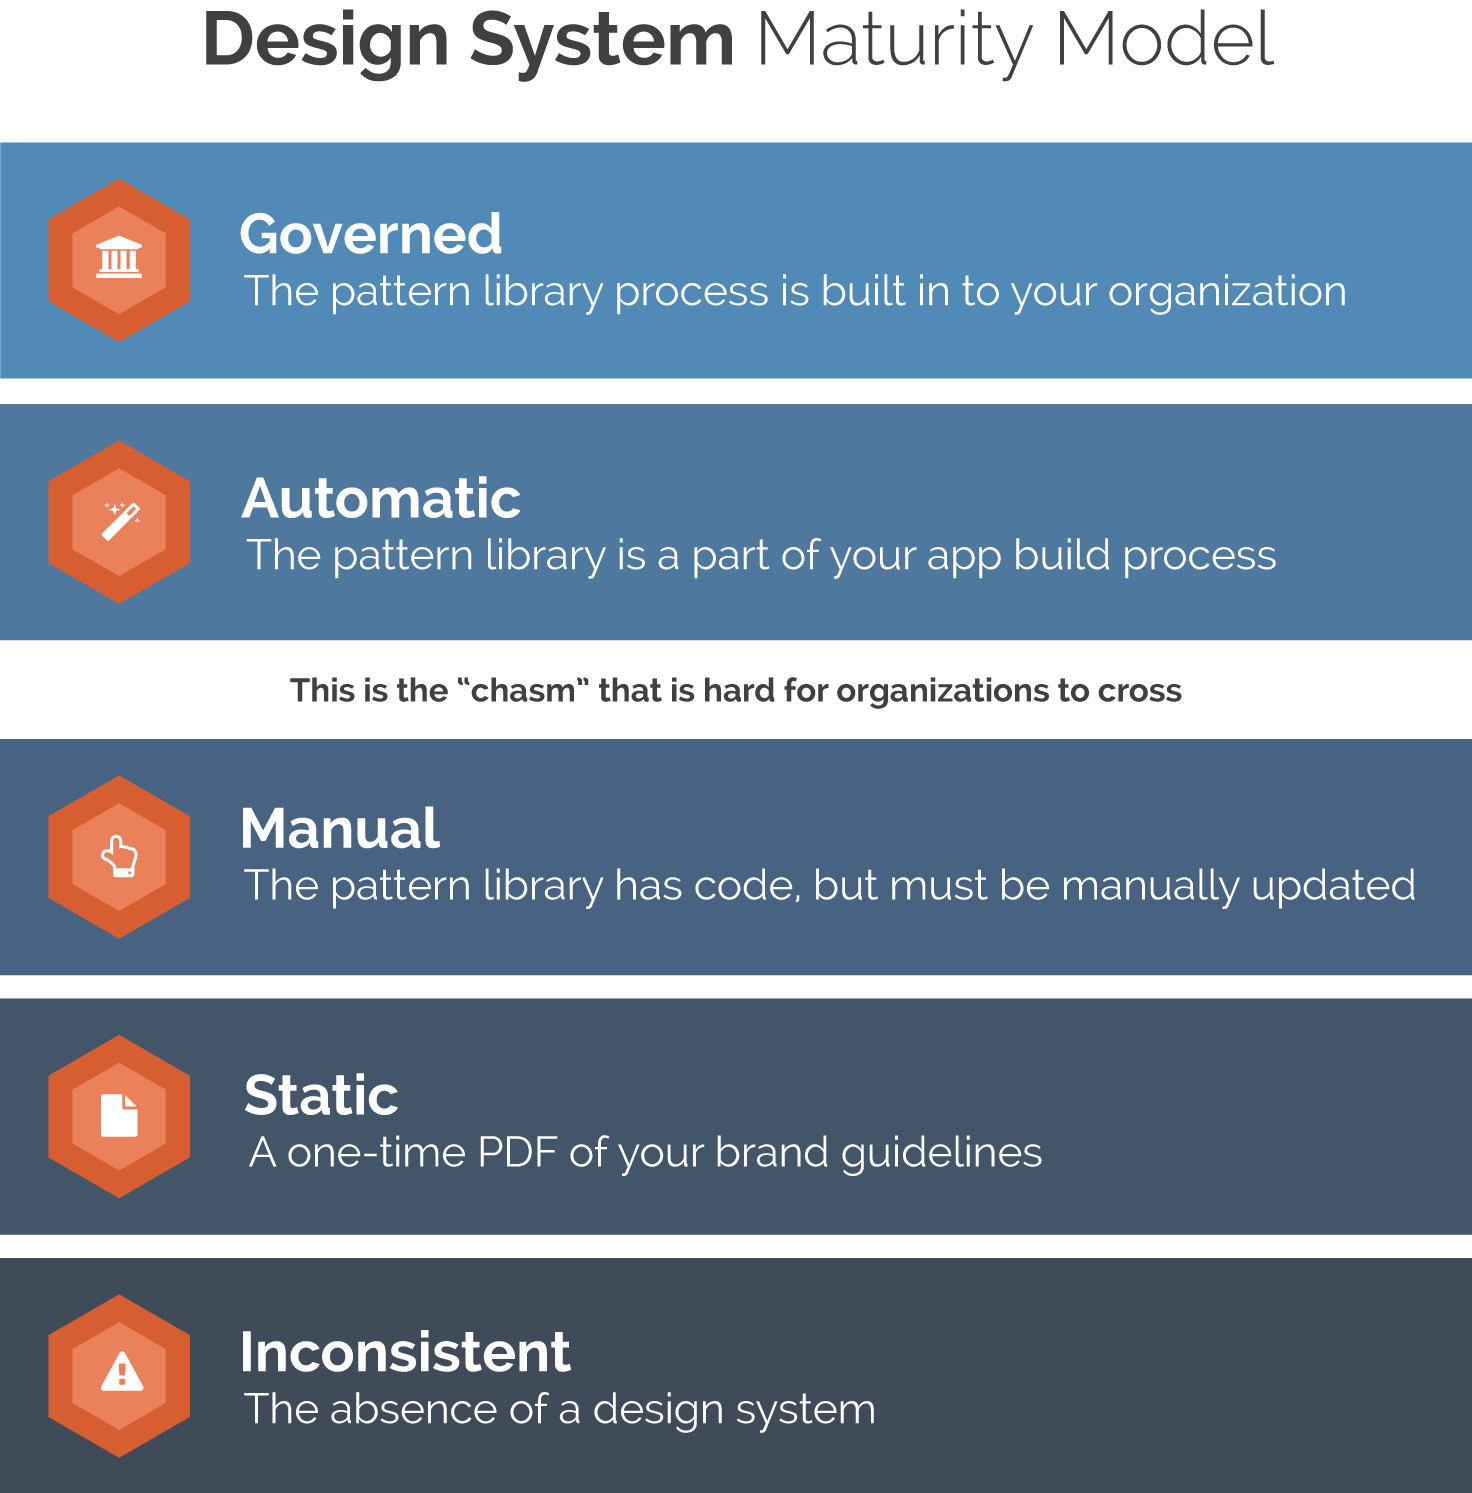 The Design System Maturity Model